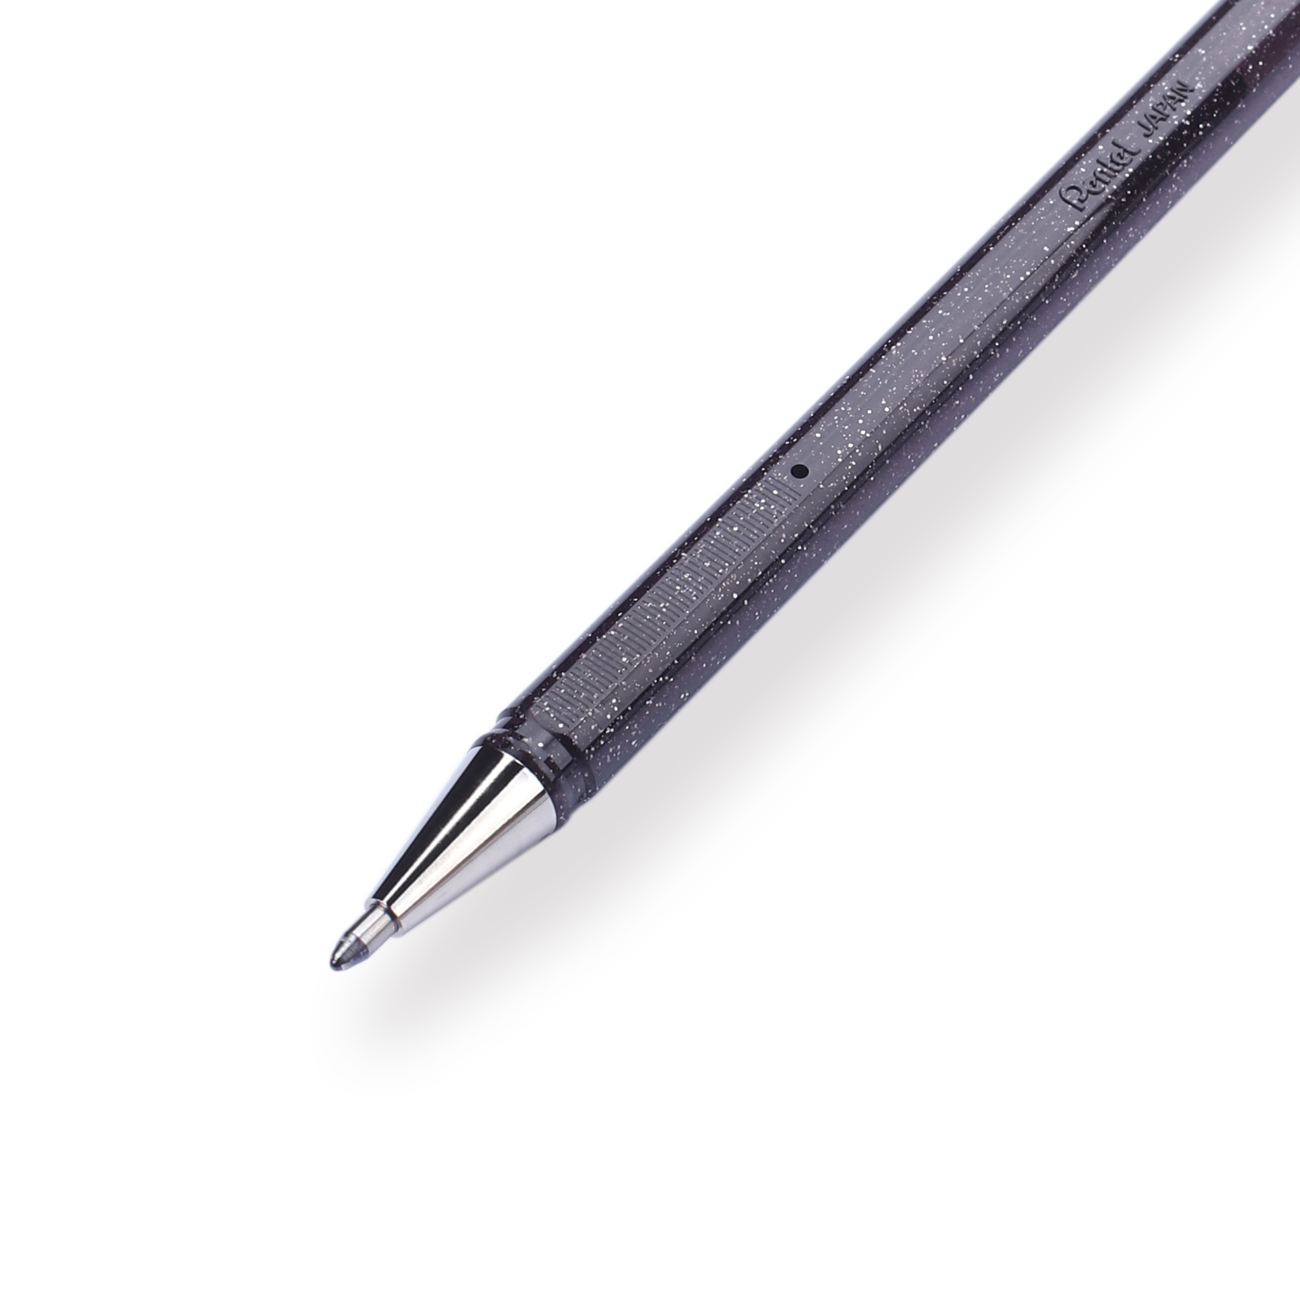 Pentel Hybrid Dual Metallic Gelstift 1,0 mm – Schwarz + Metallic-Rot